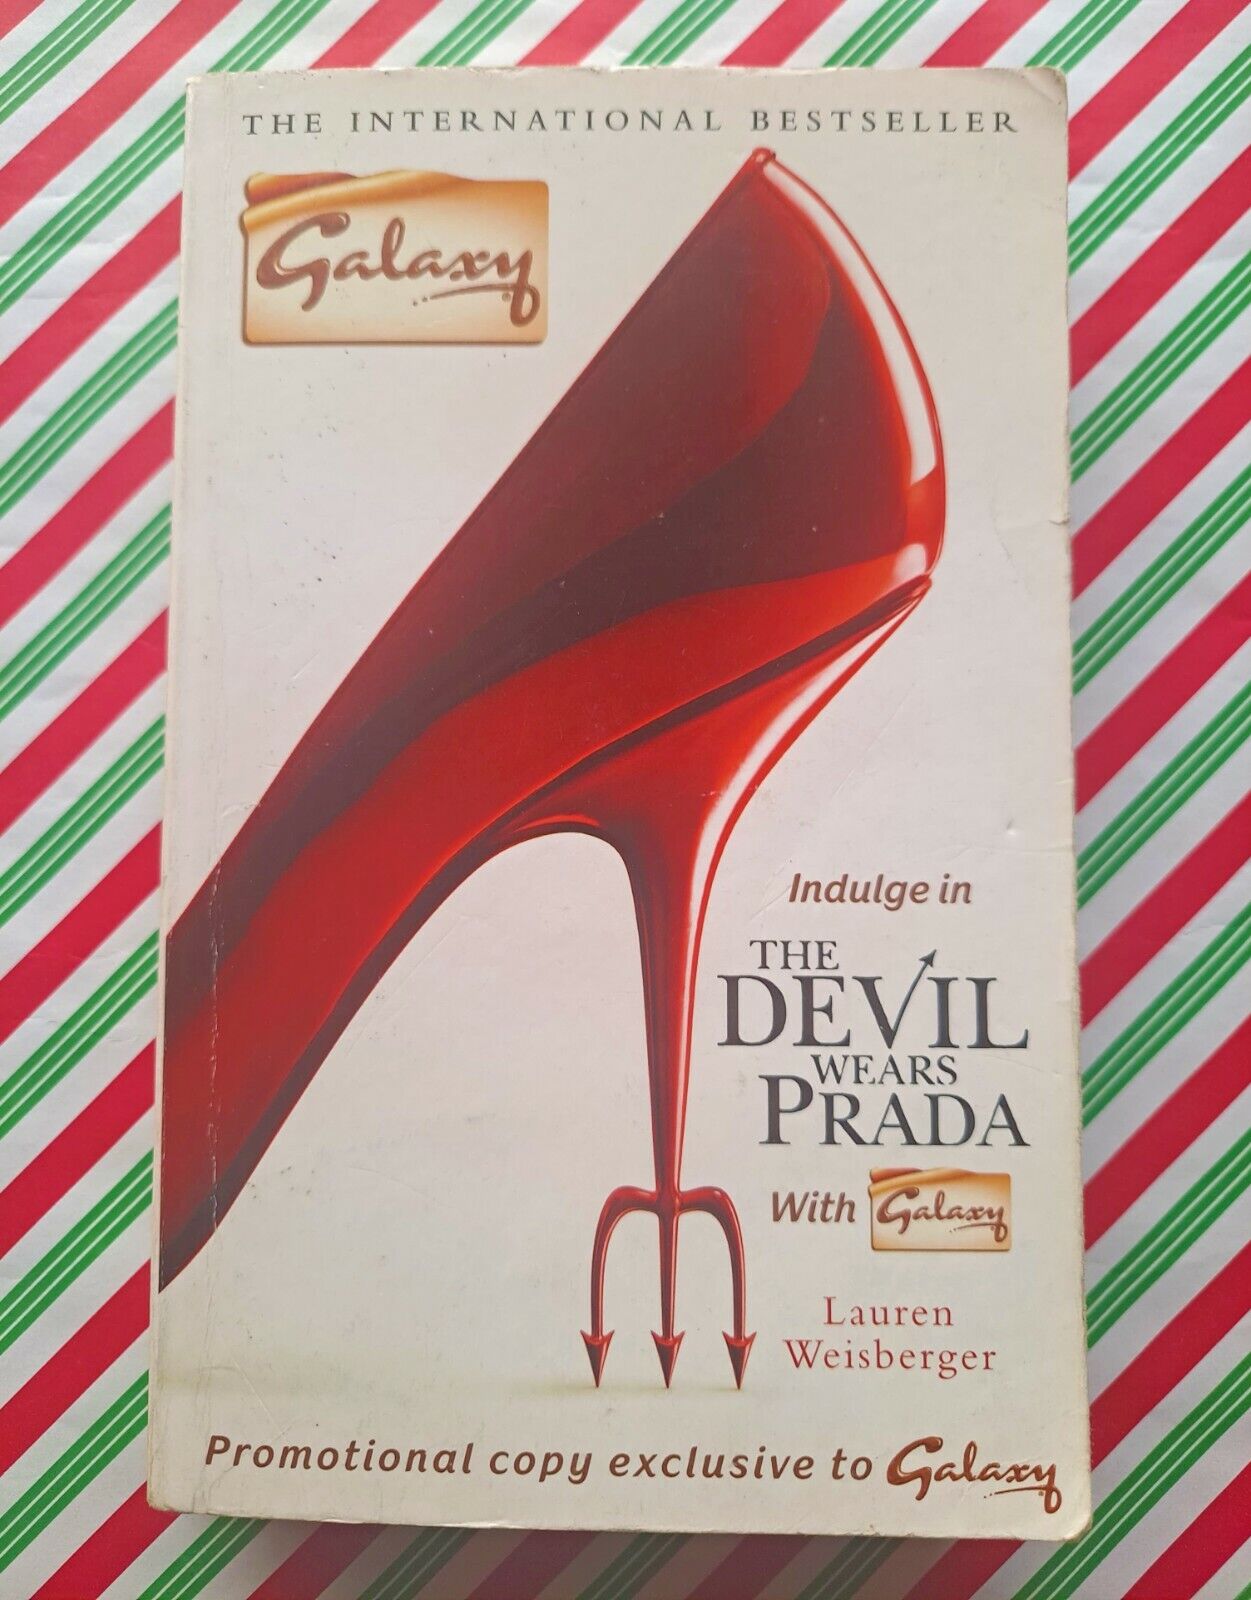 The Devil Wears Prada (Paperback) by Lauren Weisberger - Anna Wintour